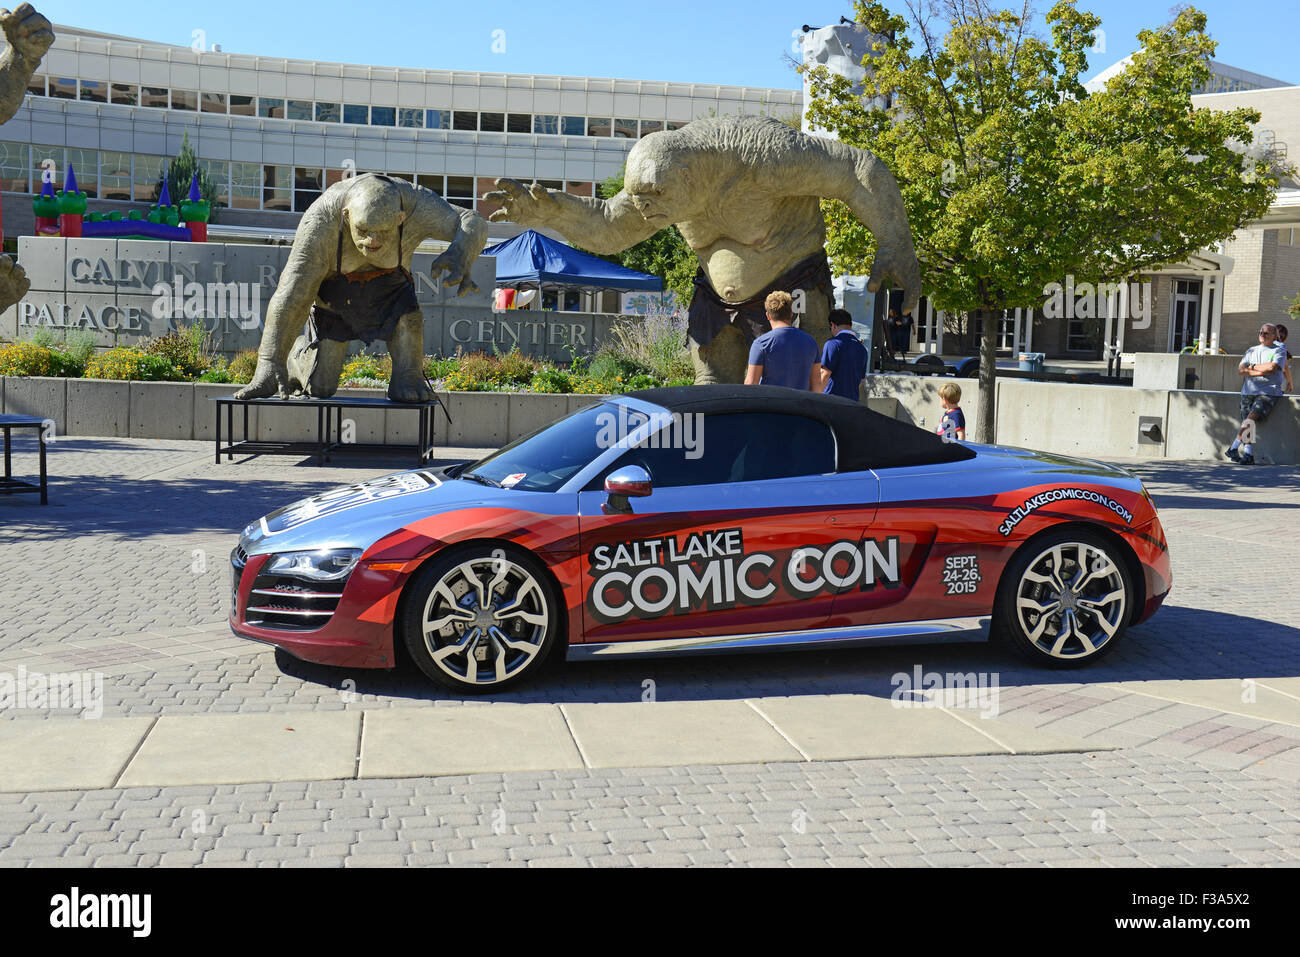 The Comic Con convention in Utah illustrates the continuing popularity